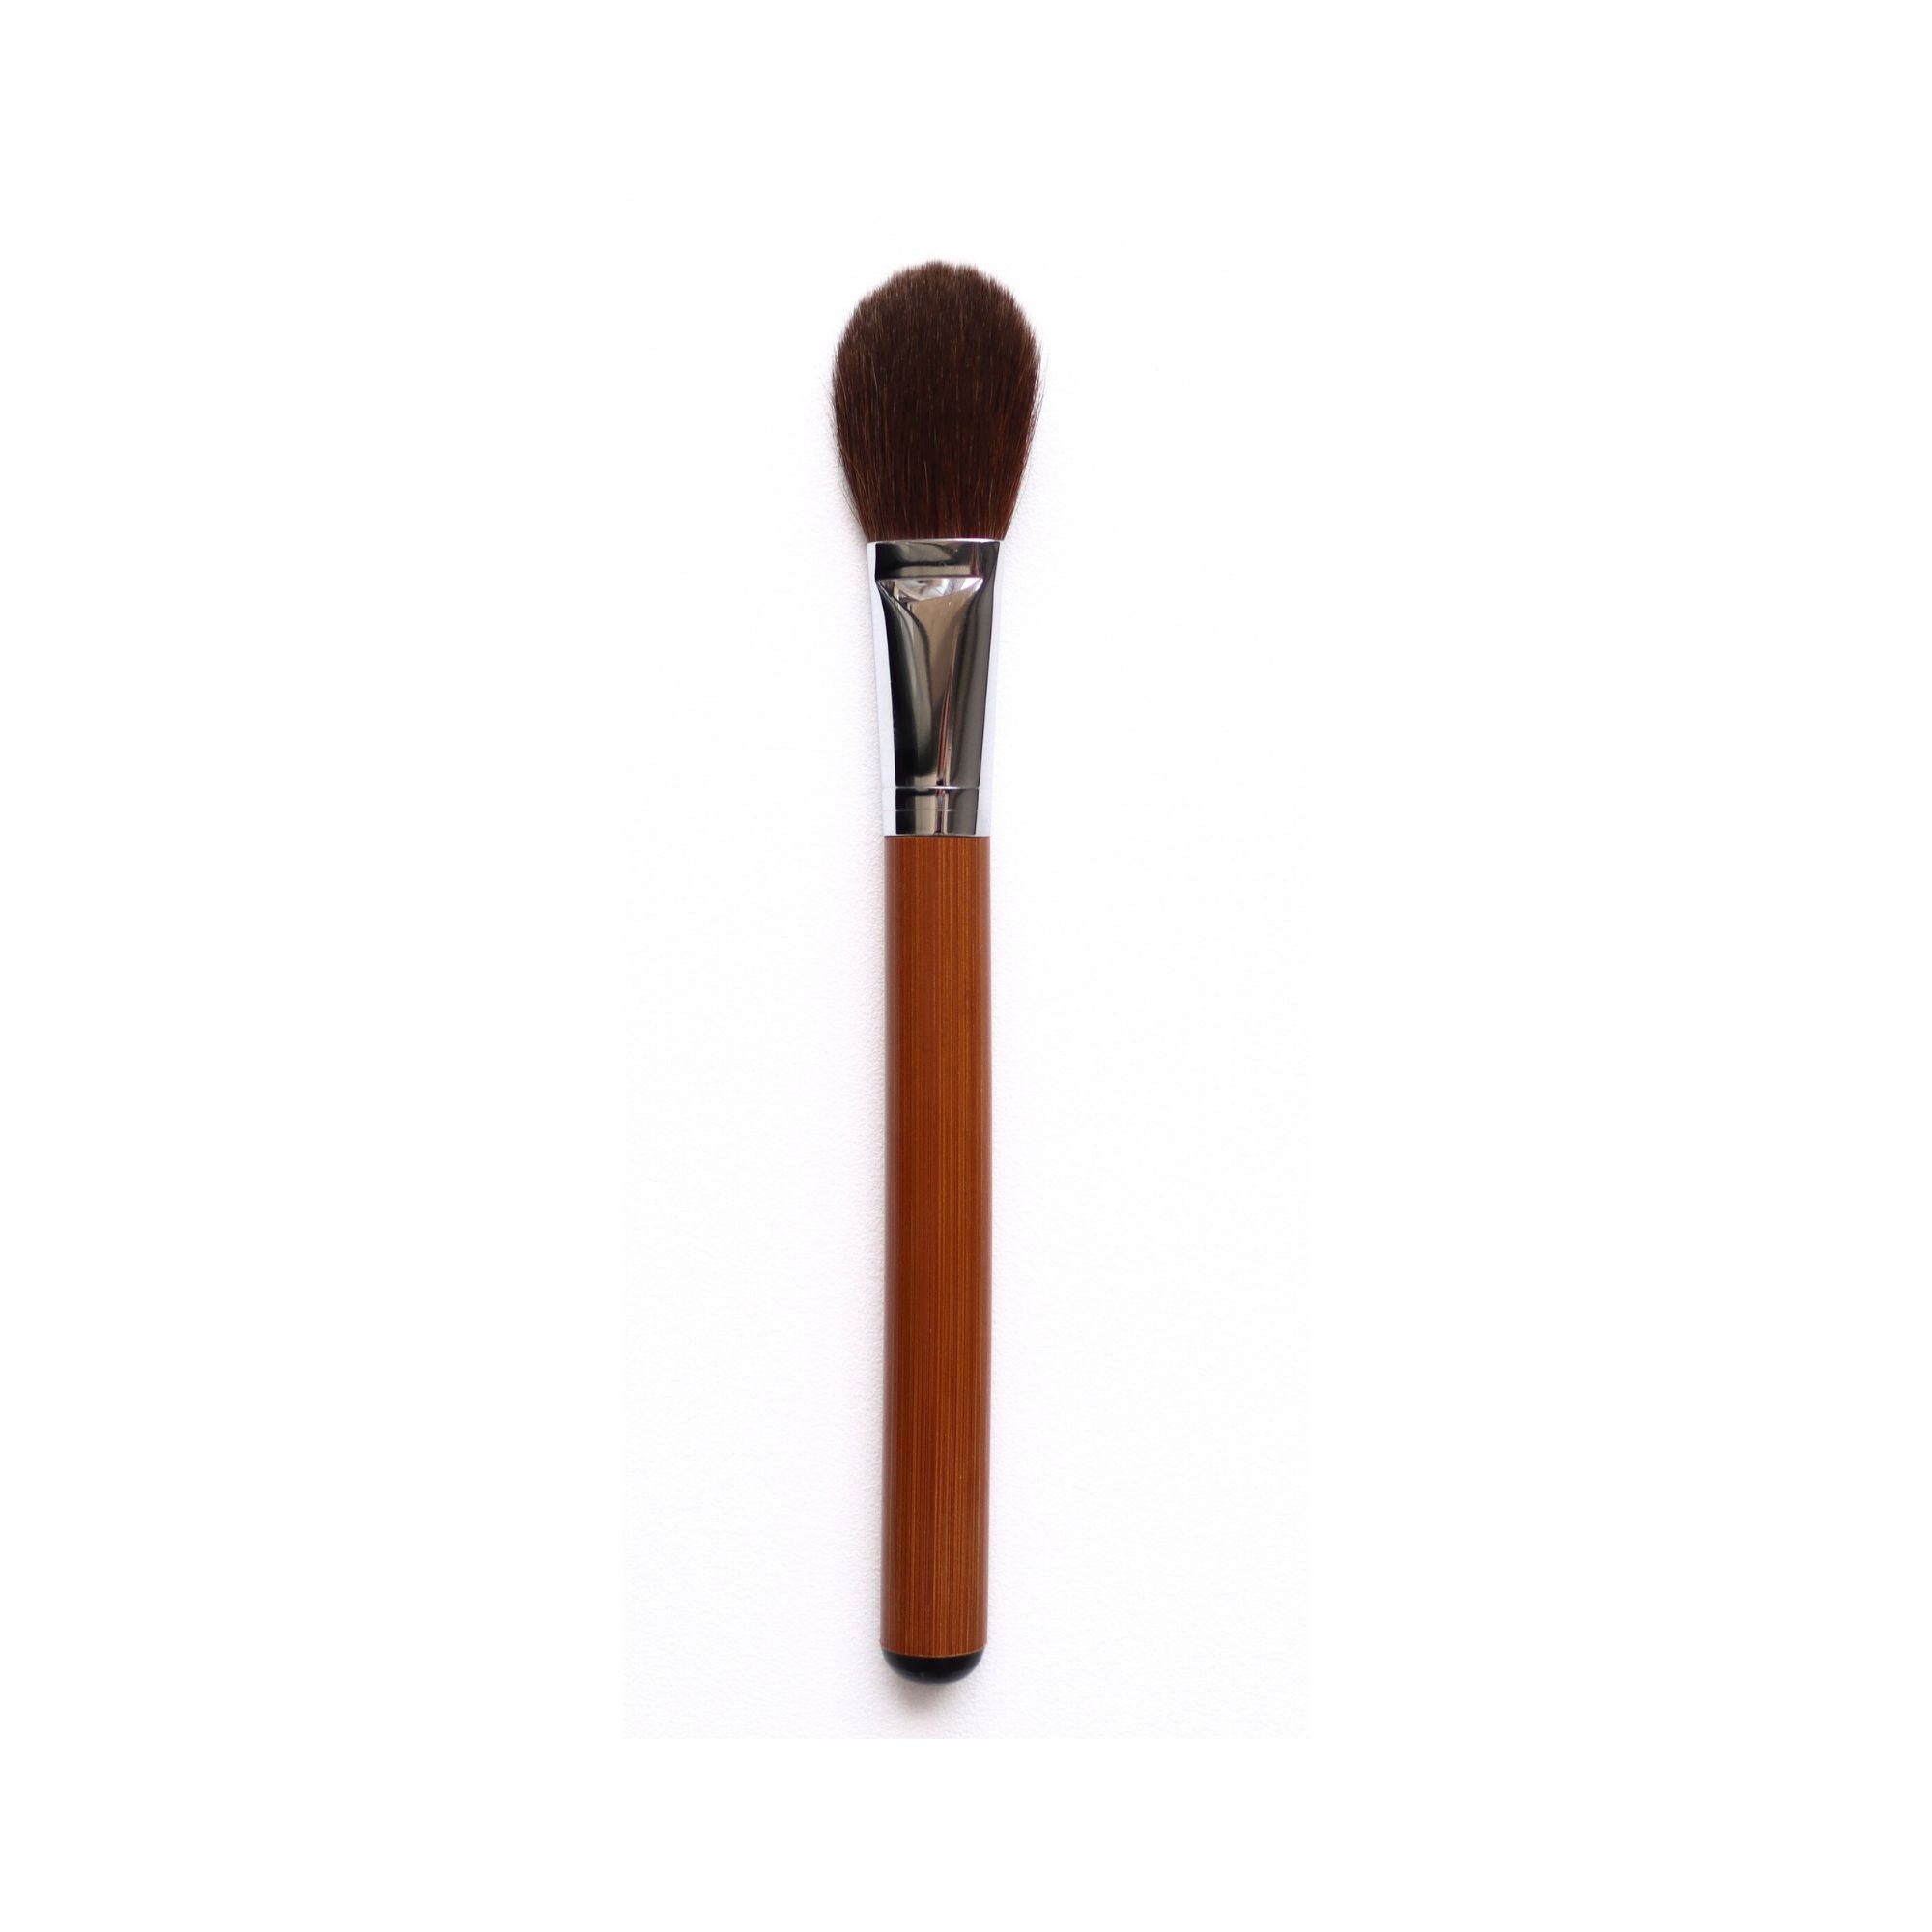 Tanseido Flat Cheek Brush, Take 竹 'Bamboo' Series (AQ20TAKE) - Fude Beauty, Japanese Makeup Brushes